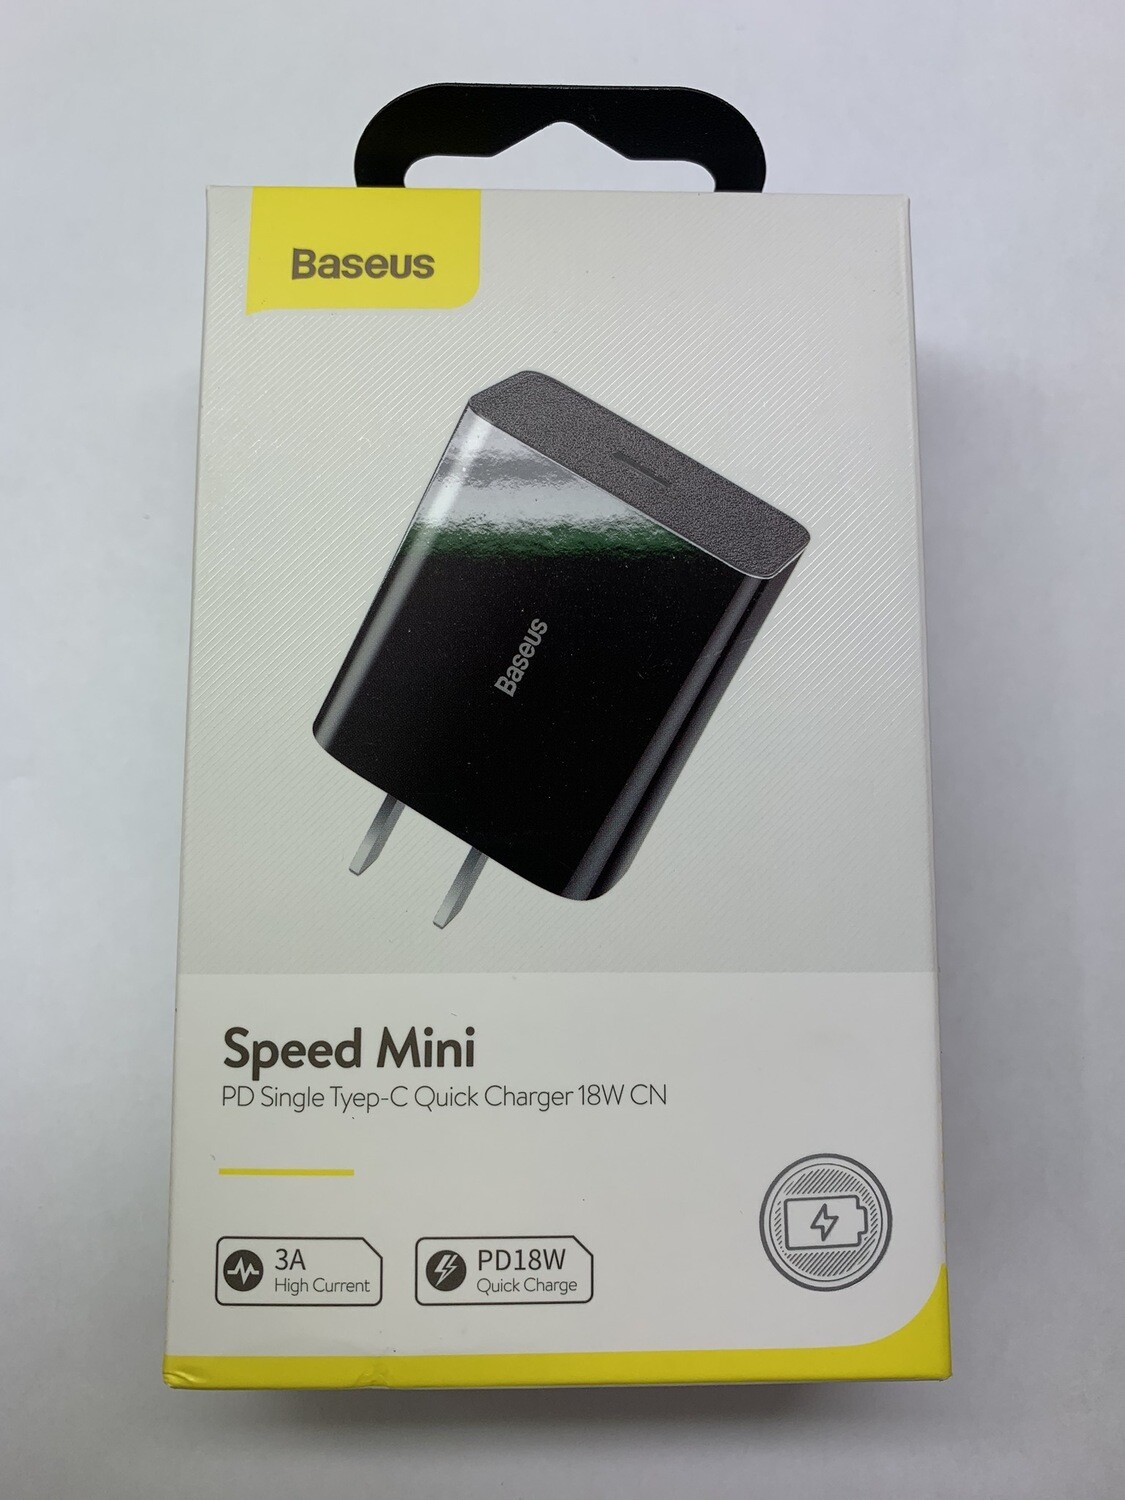 Baseus Speed Mini PD Single Type-C Quick Charger 18W CN